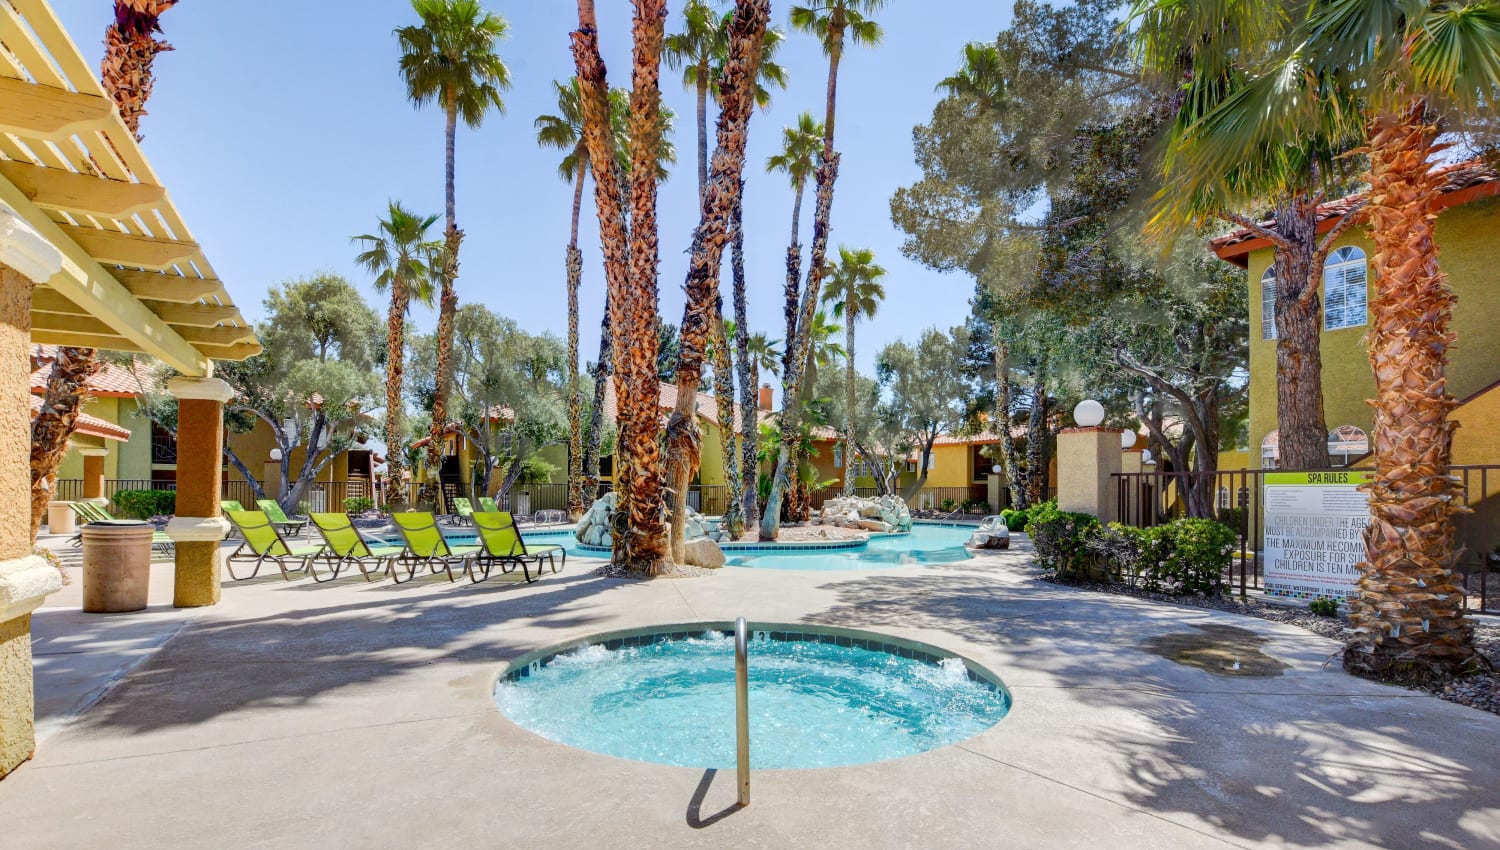 Pool and hot tub at Breakers Apartments in Las Vegas, Nevada